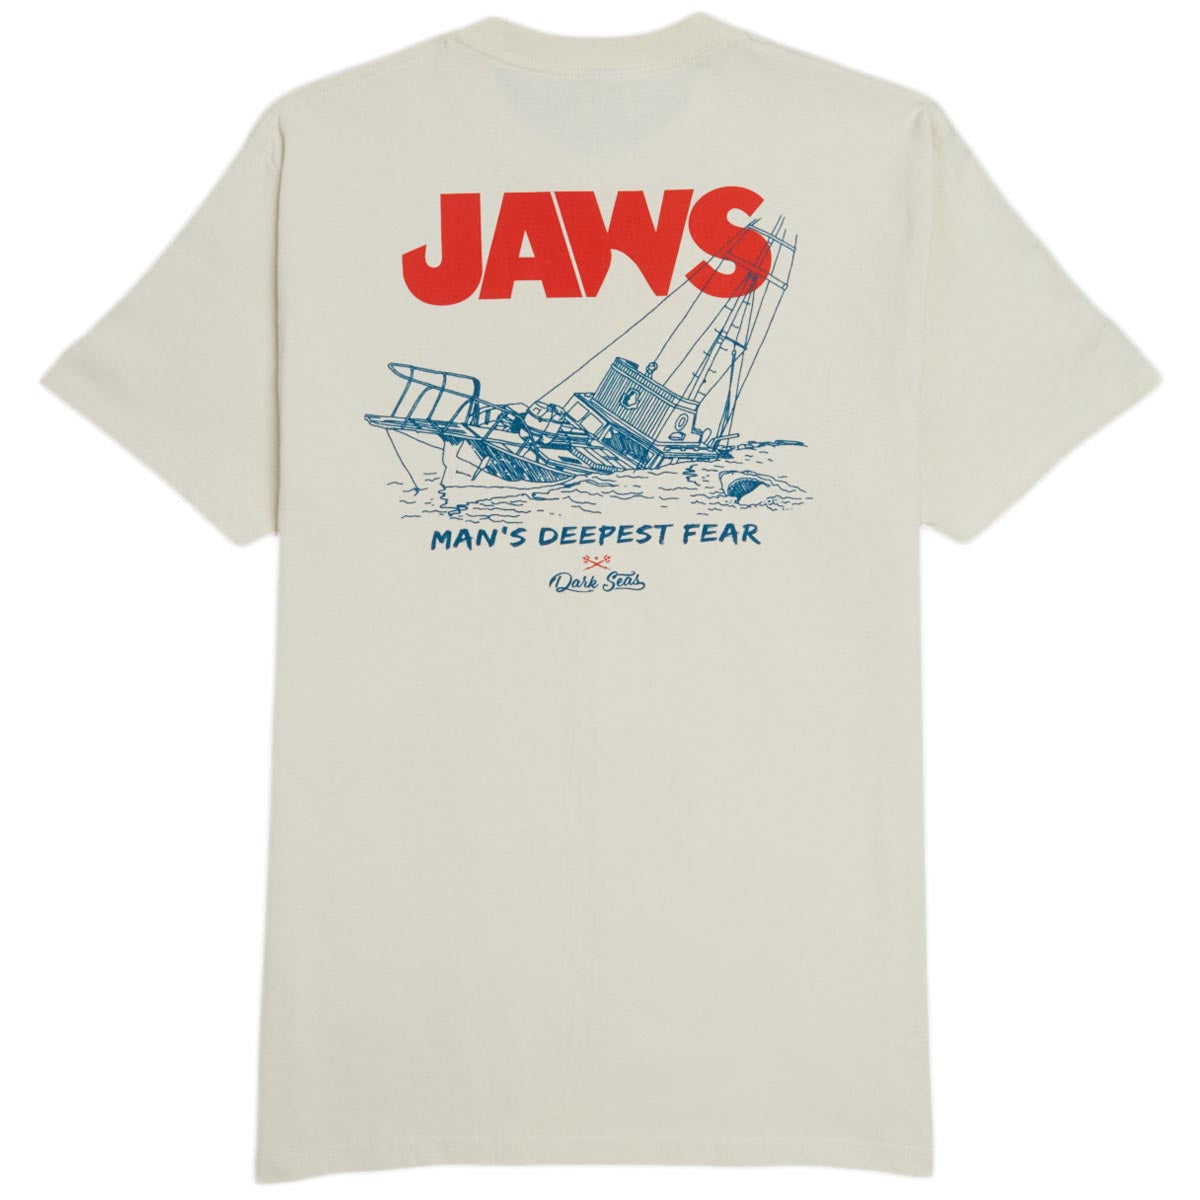 Dark Seas x Jaws Deepest Fear T-Shirt - Cream image 1